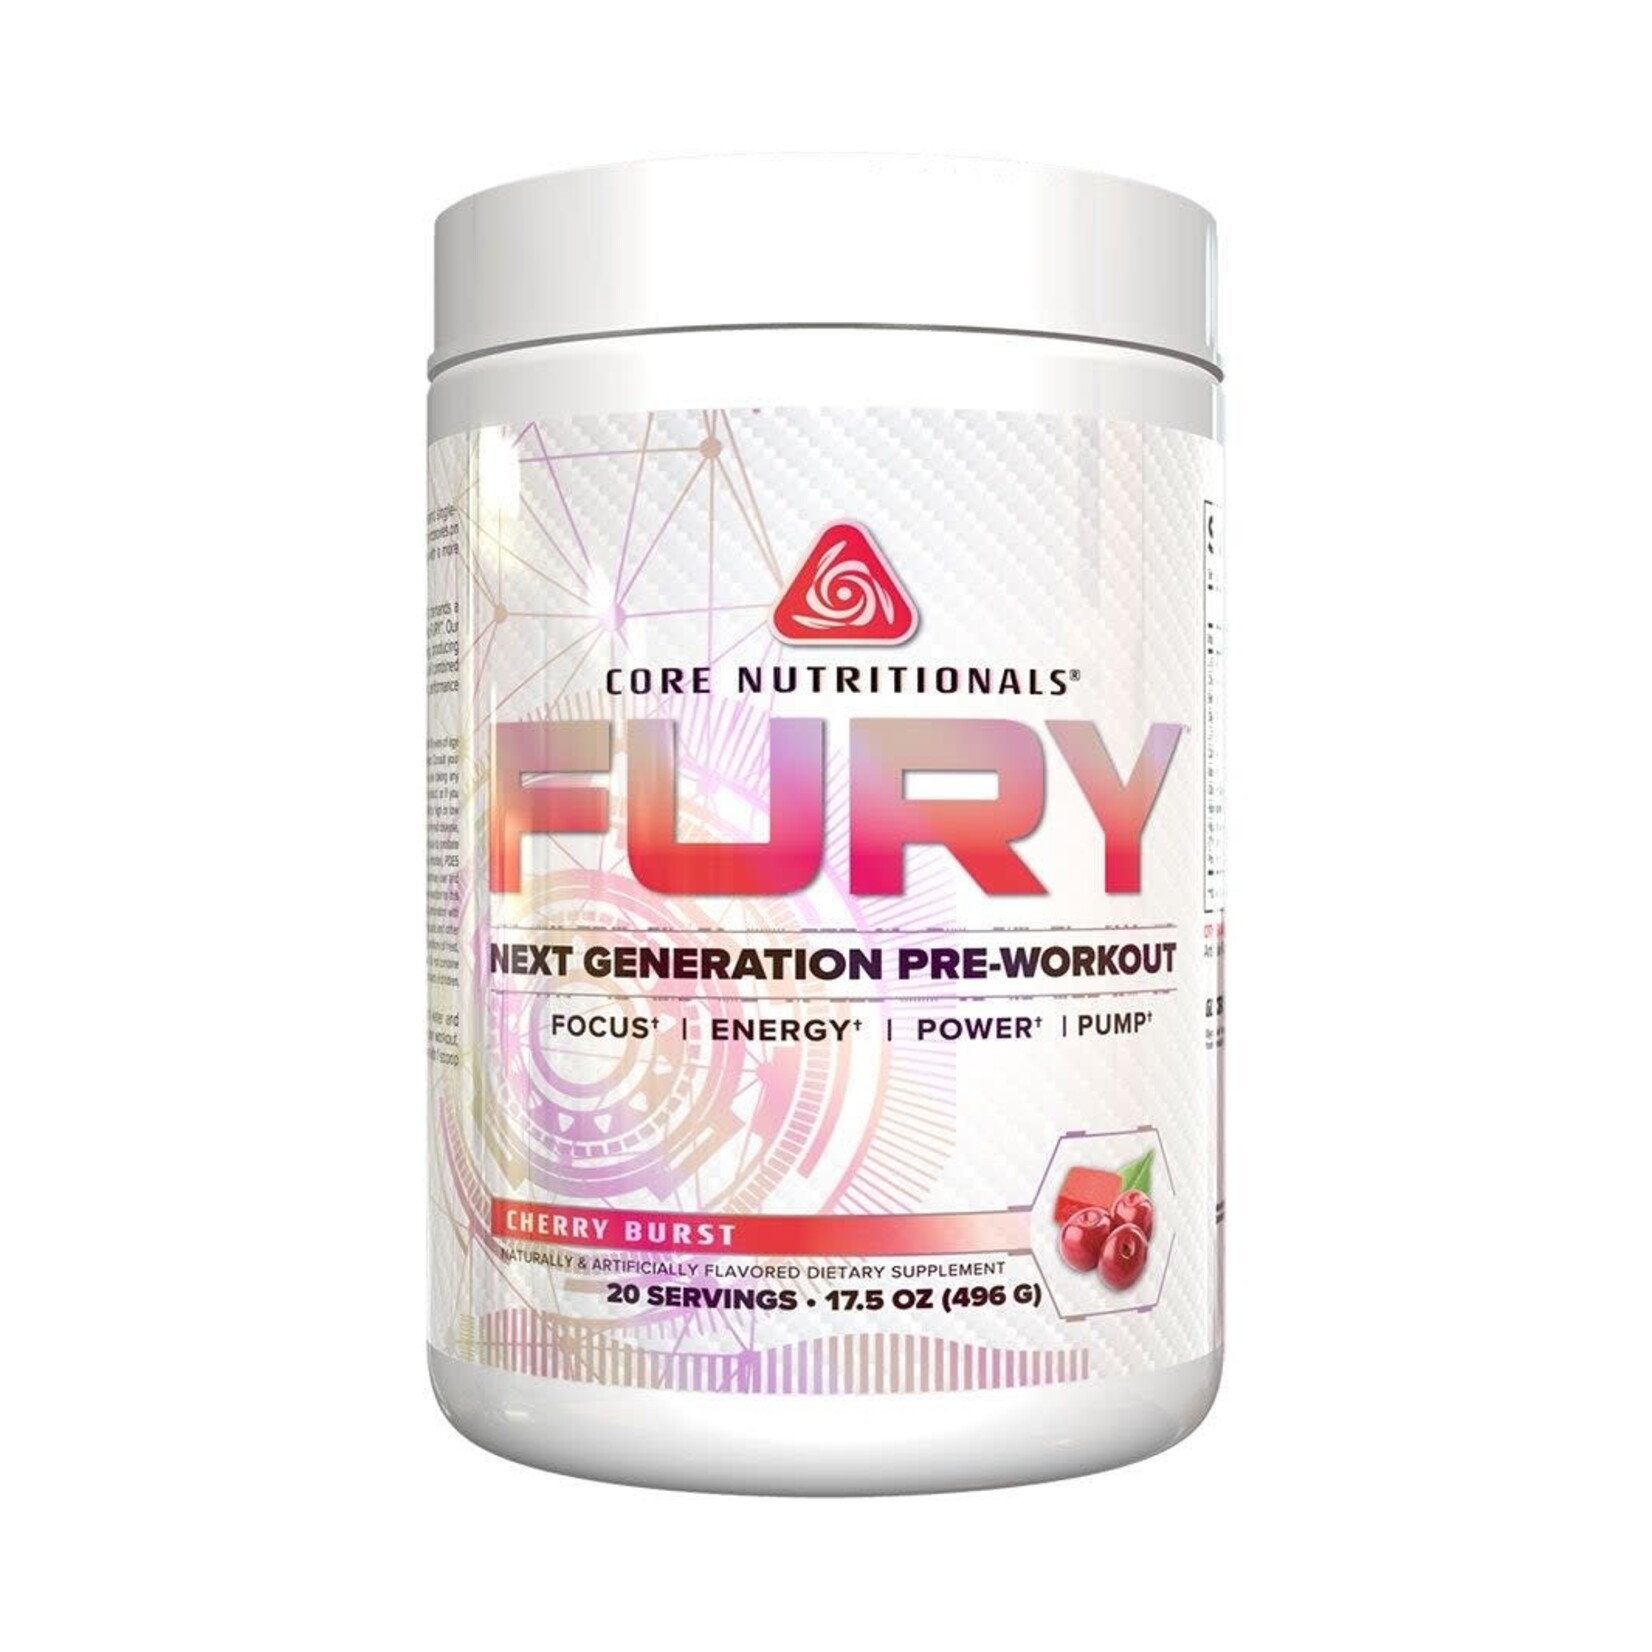 Core Nutritionals Core Nutritionals-Fury